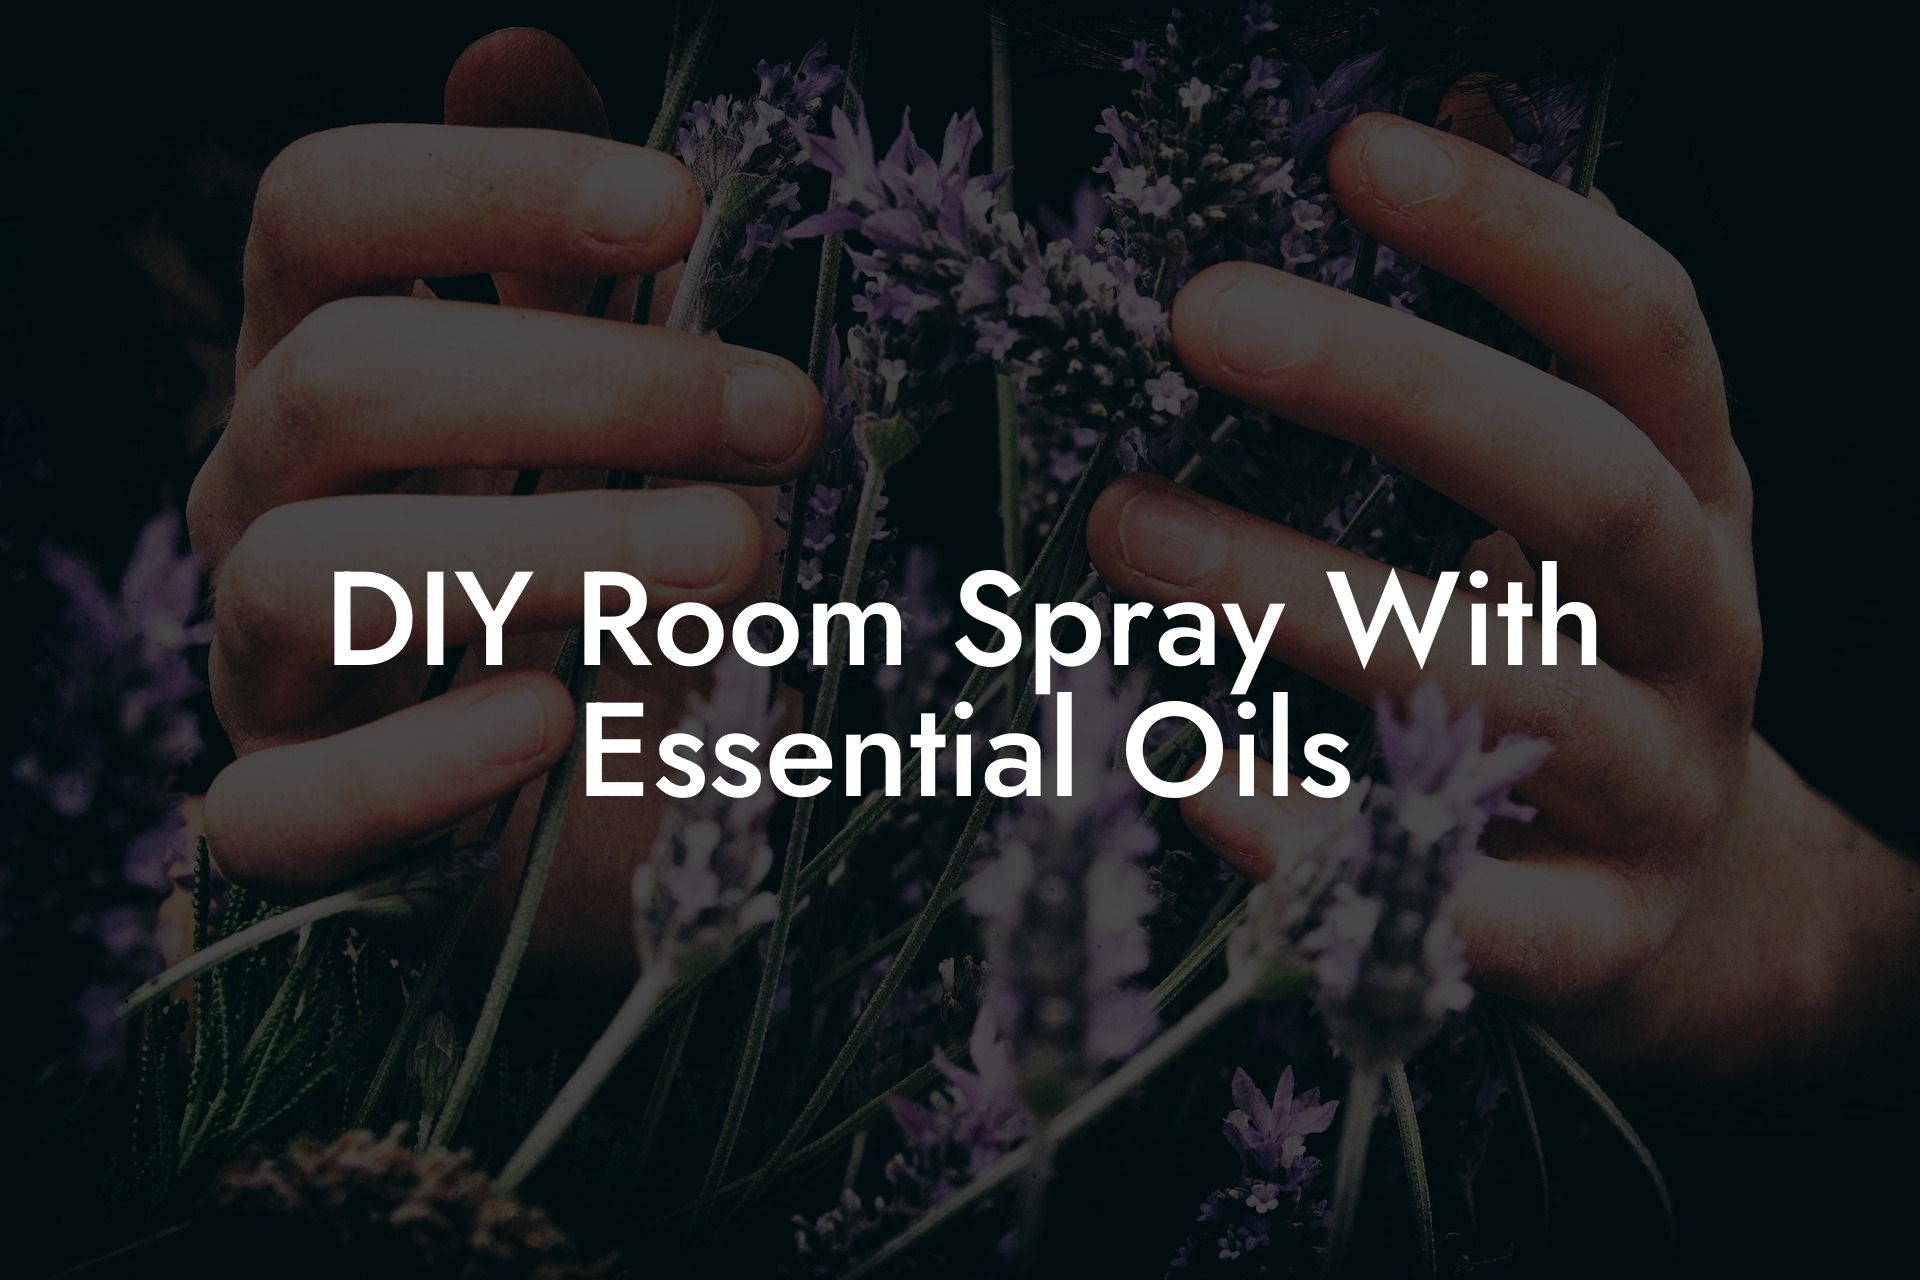 DIY Room Spray With Essential Oils